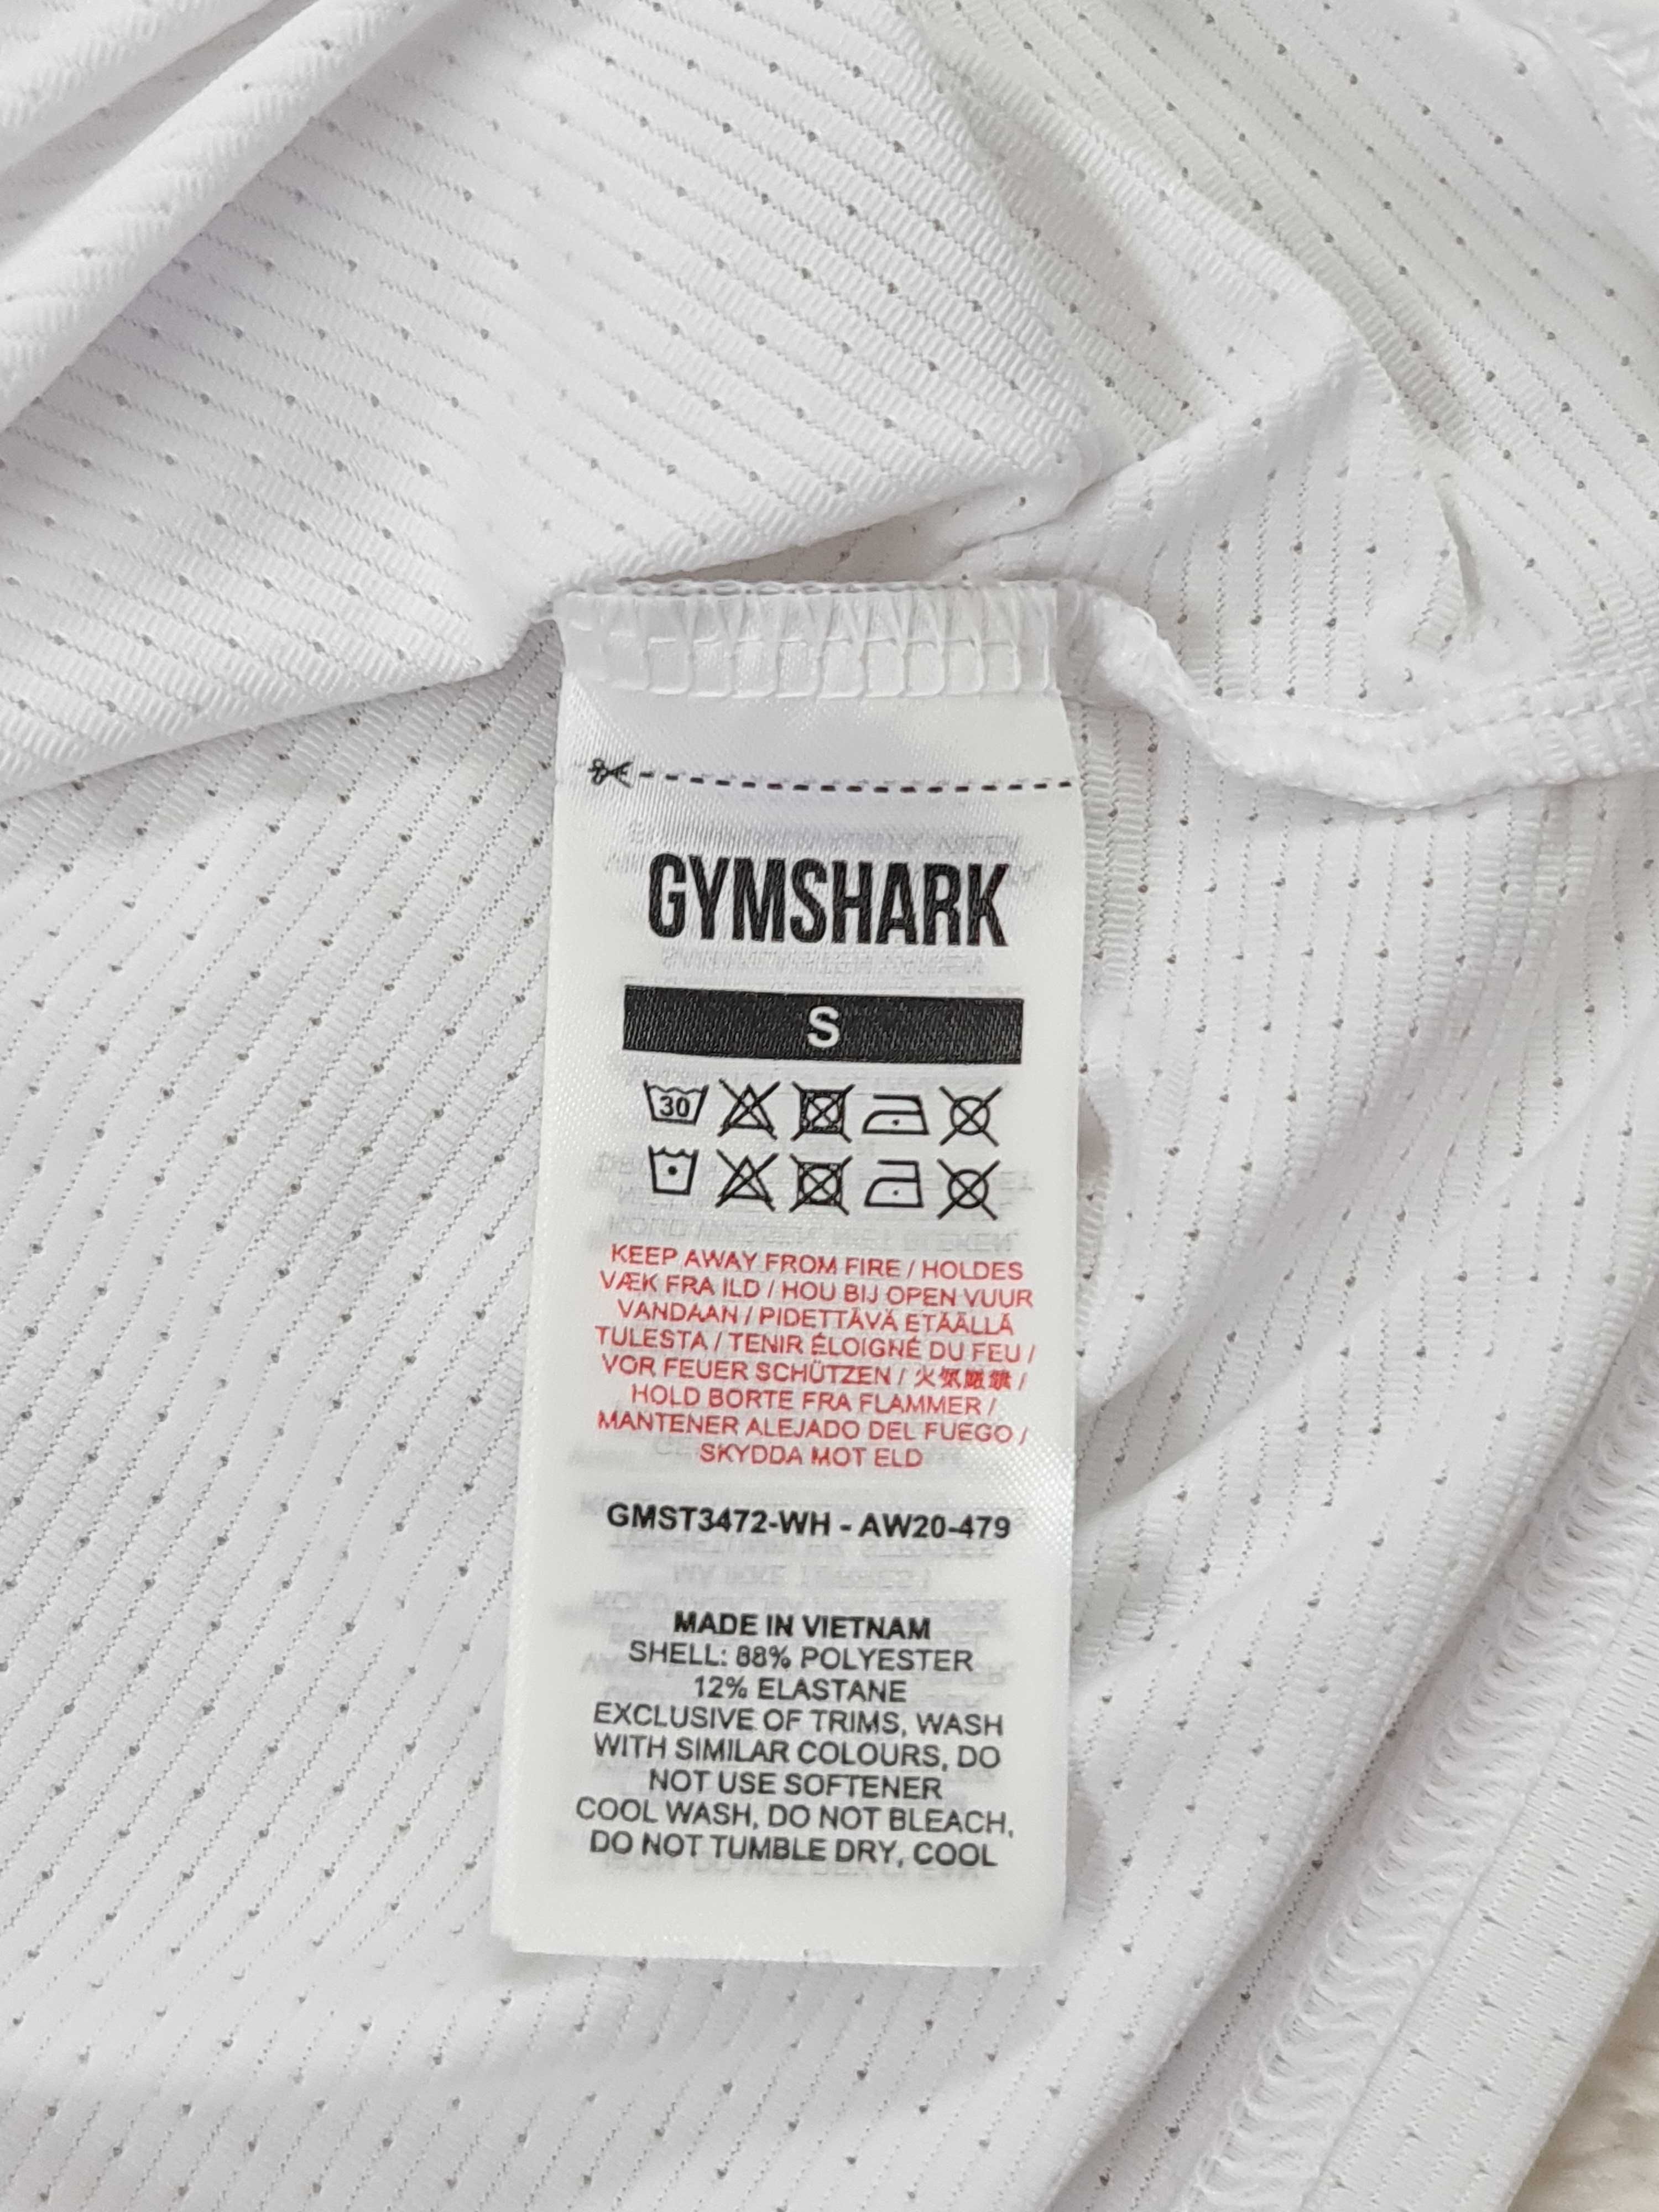 Koszulka T-shirt Gymshark Logo Biała Rozmiar S / M Oryginalna